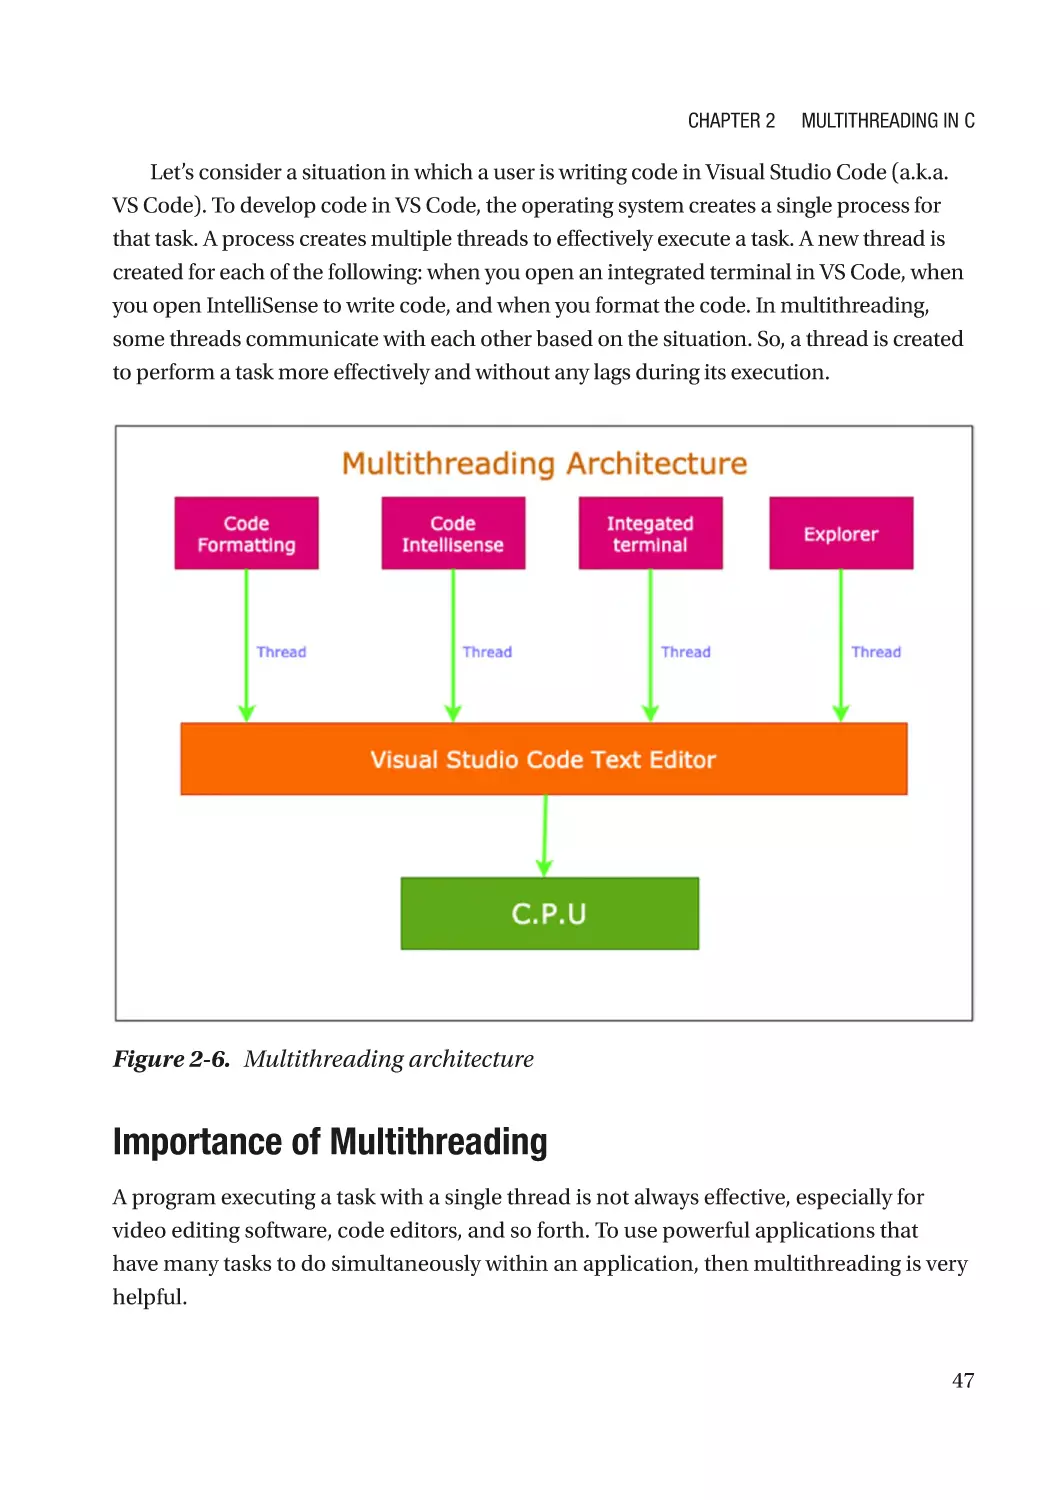 Importance of Multithreading